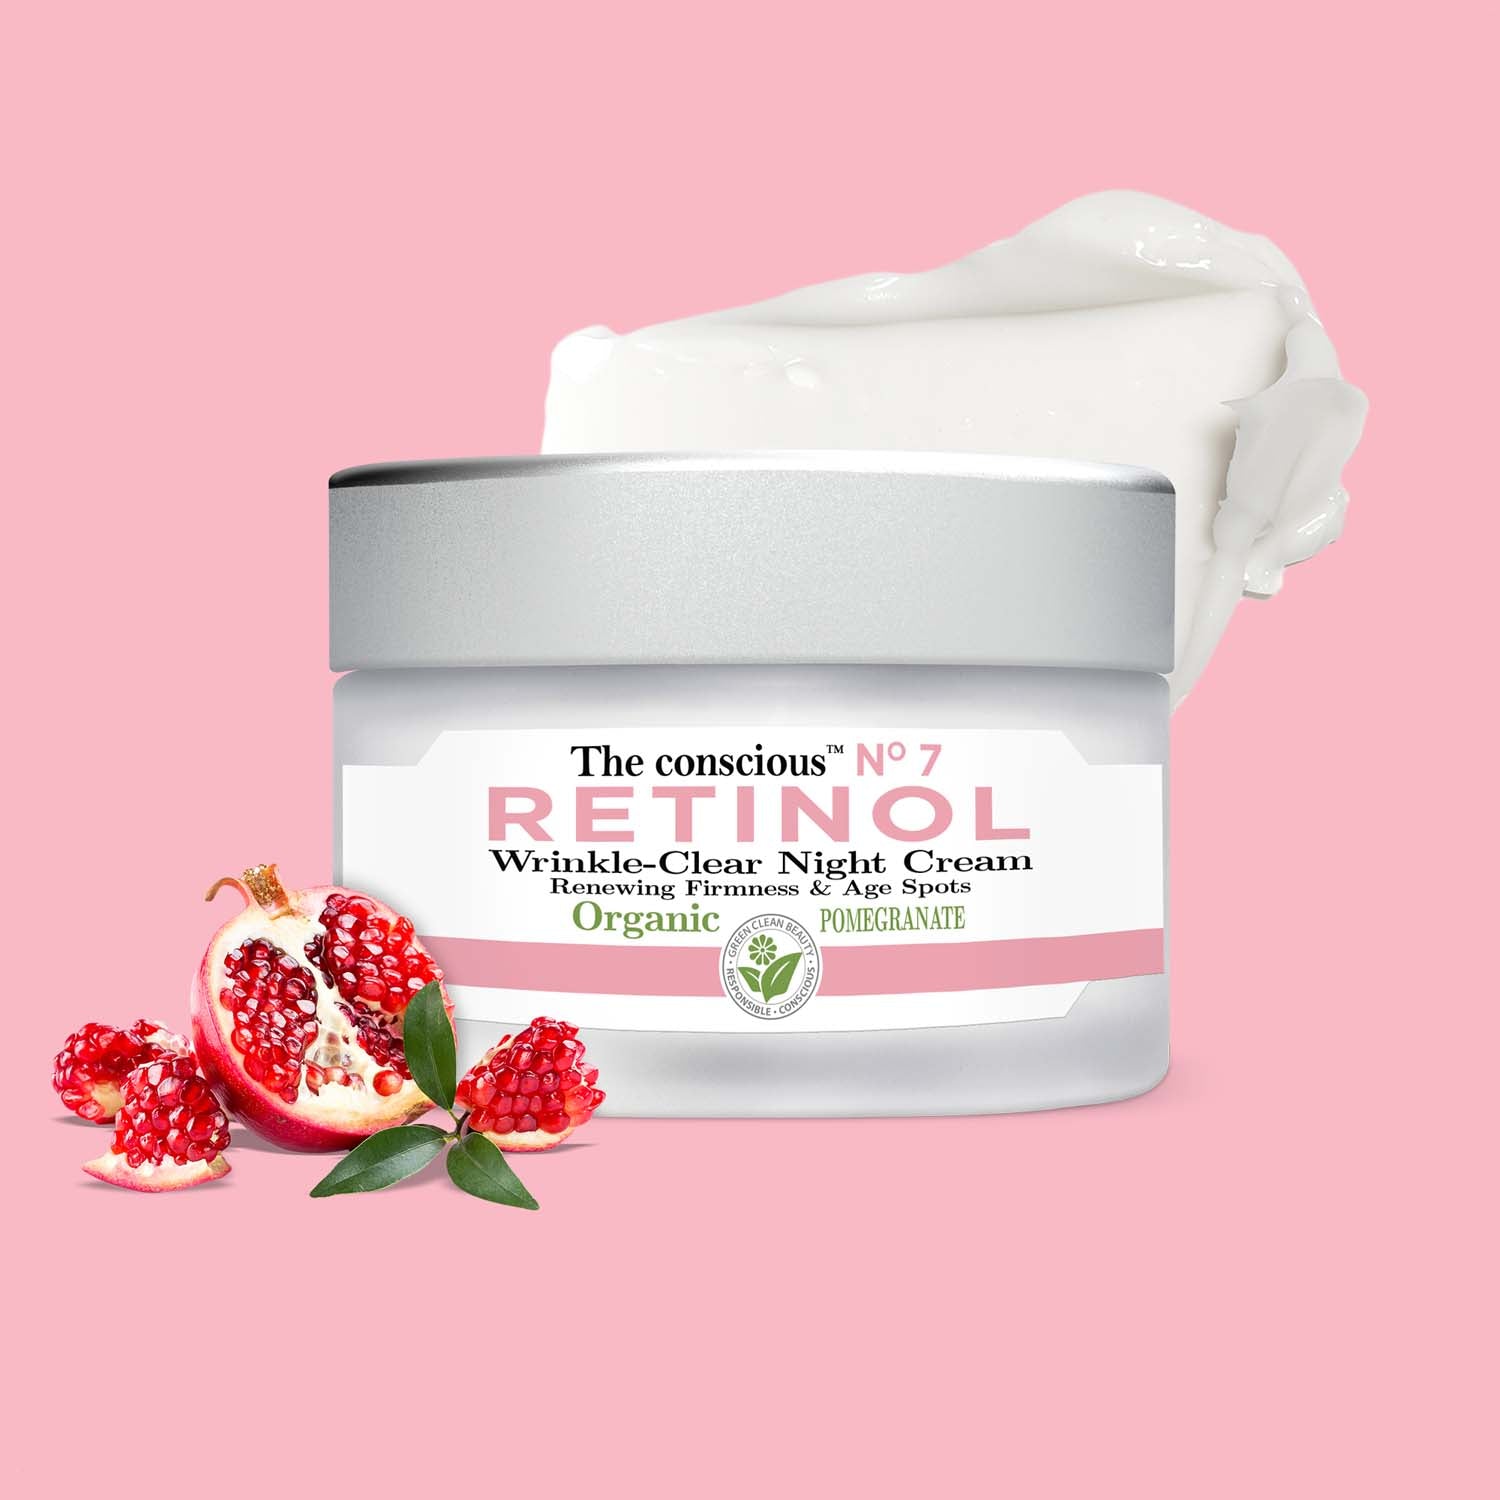 The conscious™ Retinol Wrinkle-Clear Night Cream Organic Pomegranate